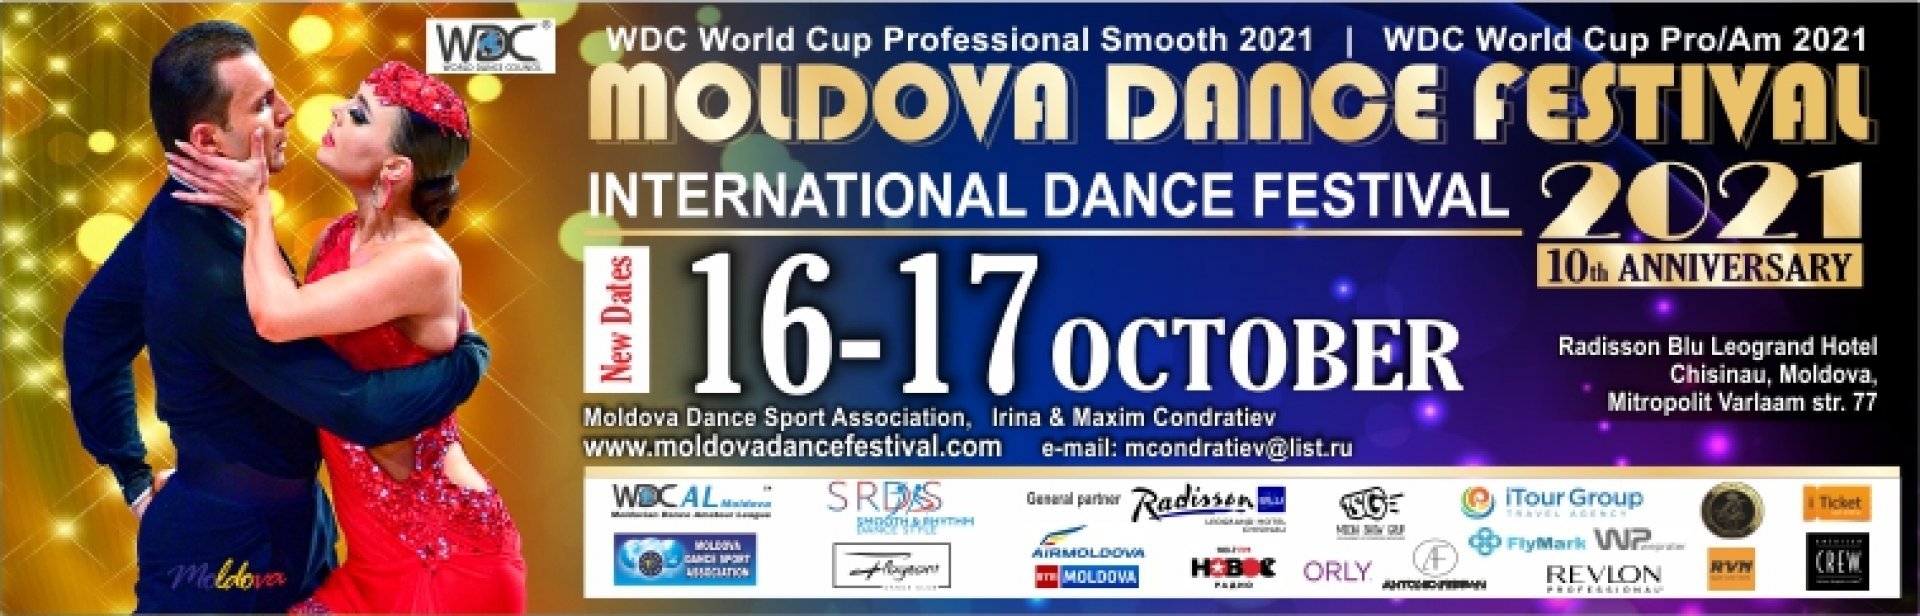 16 Octombrie 14:00-16:30 - Moldova Dance Festival 2021